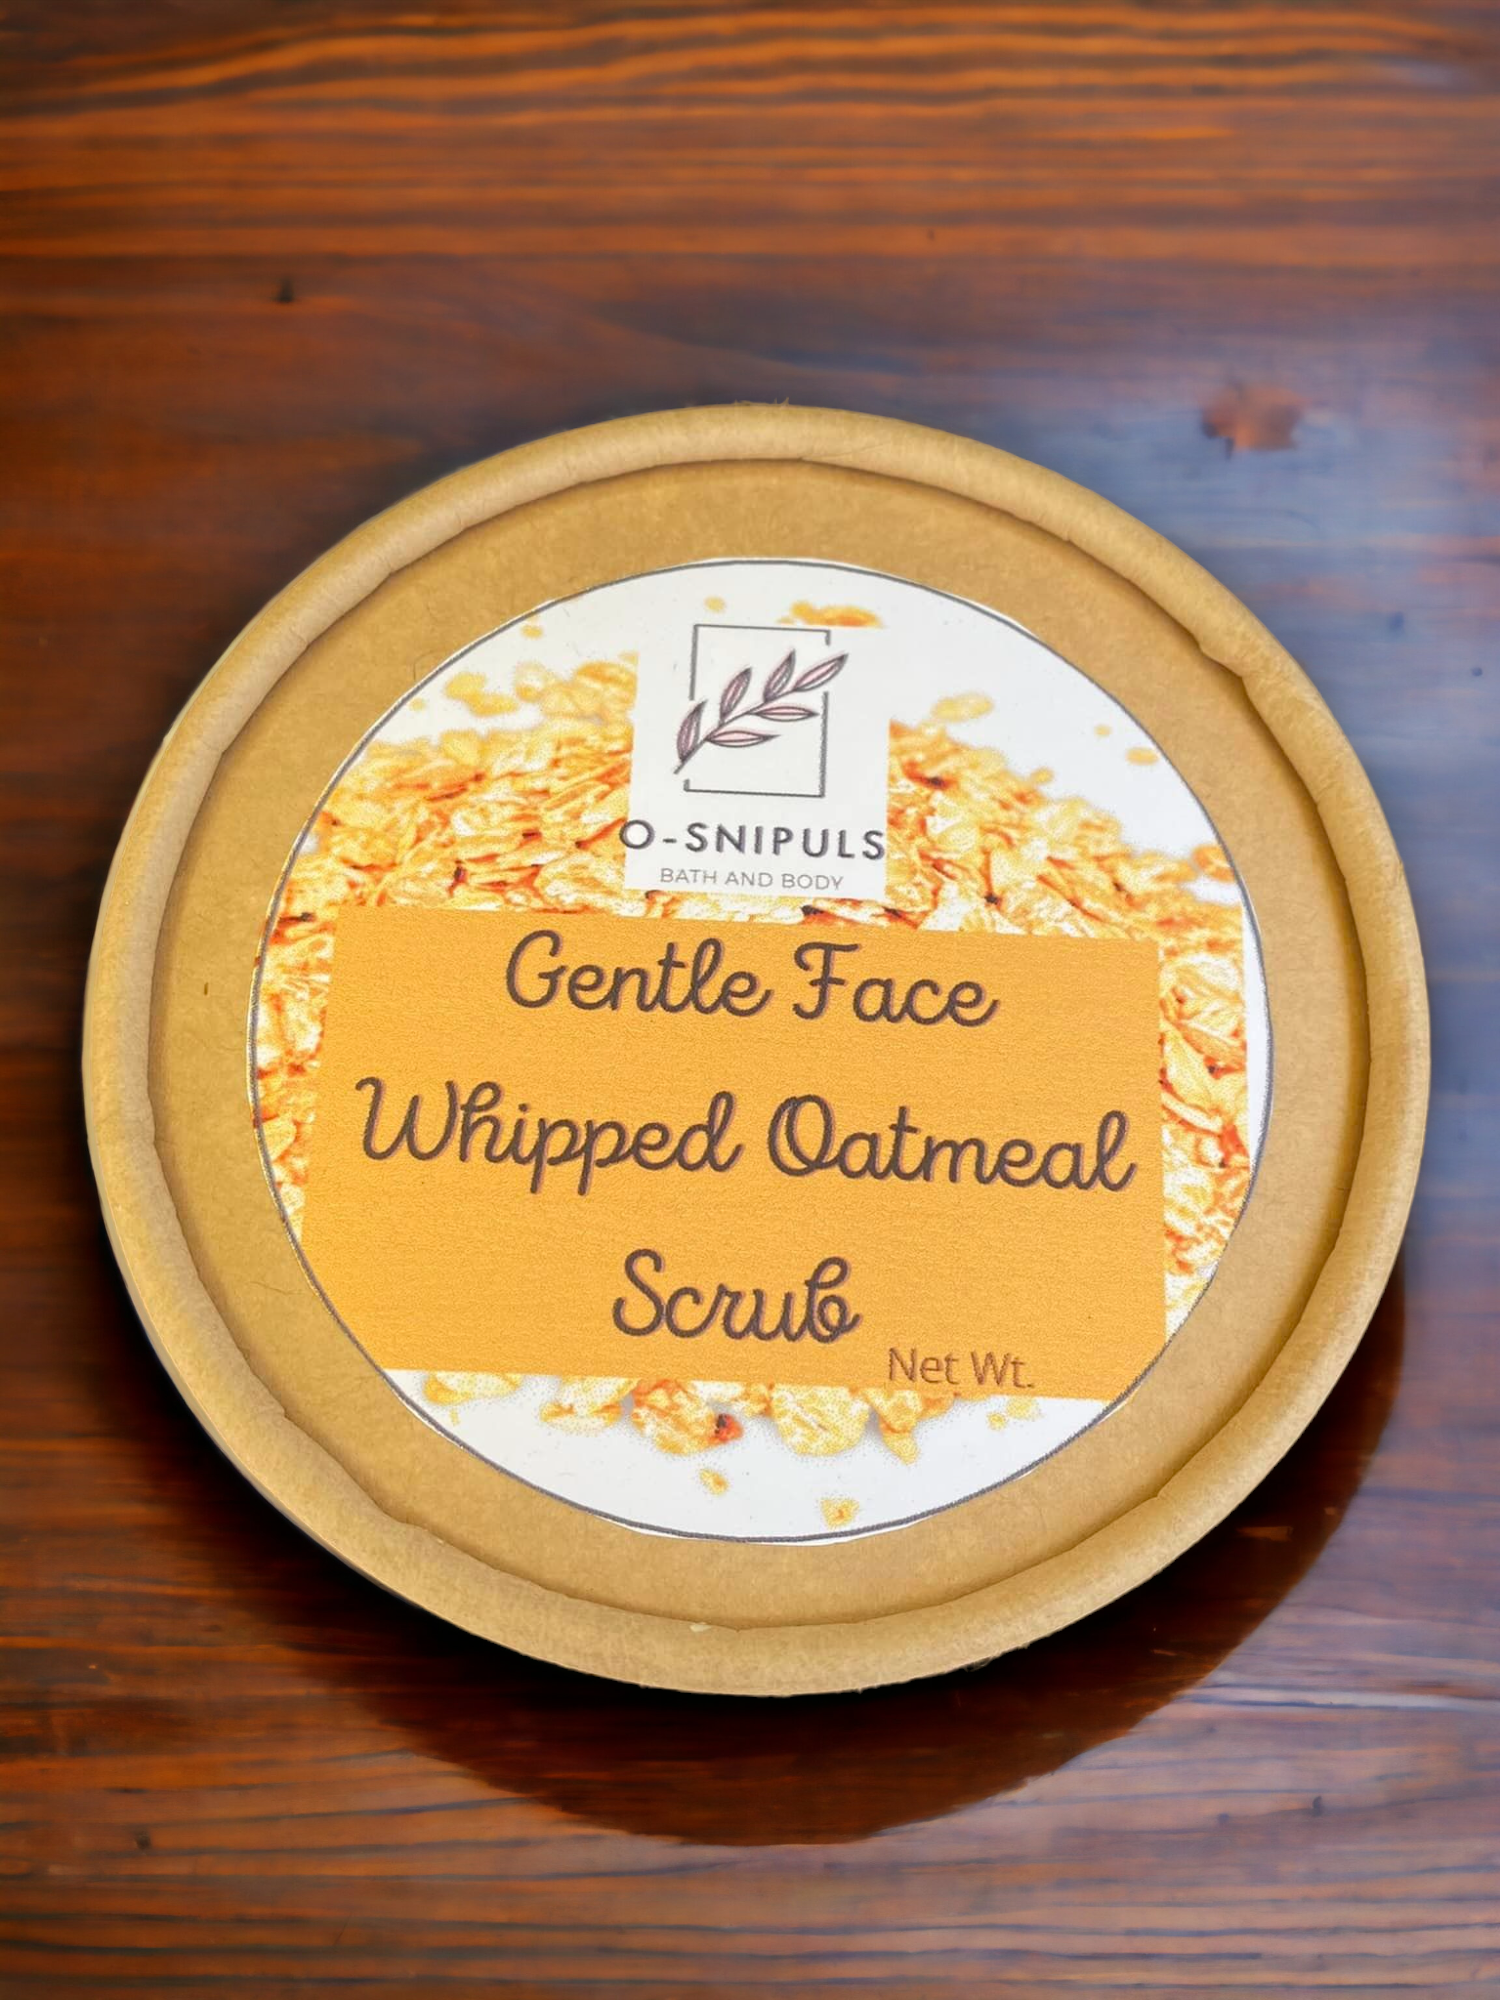 Oatmeal and "honey" gentle face scrub